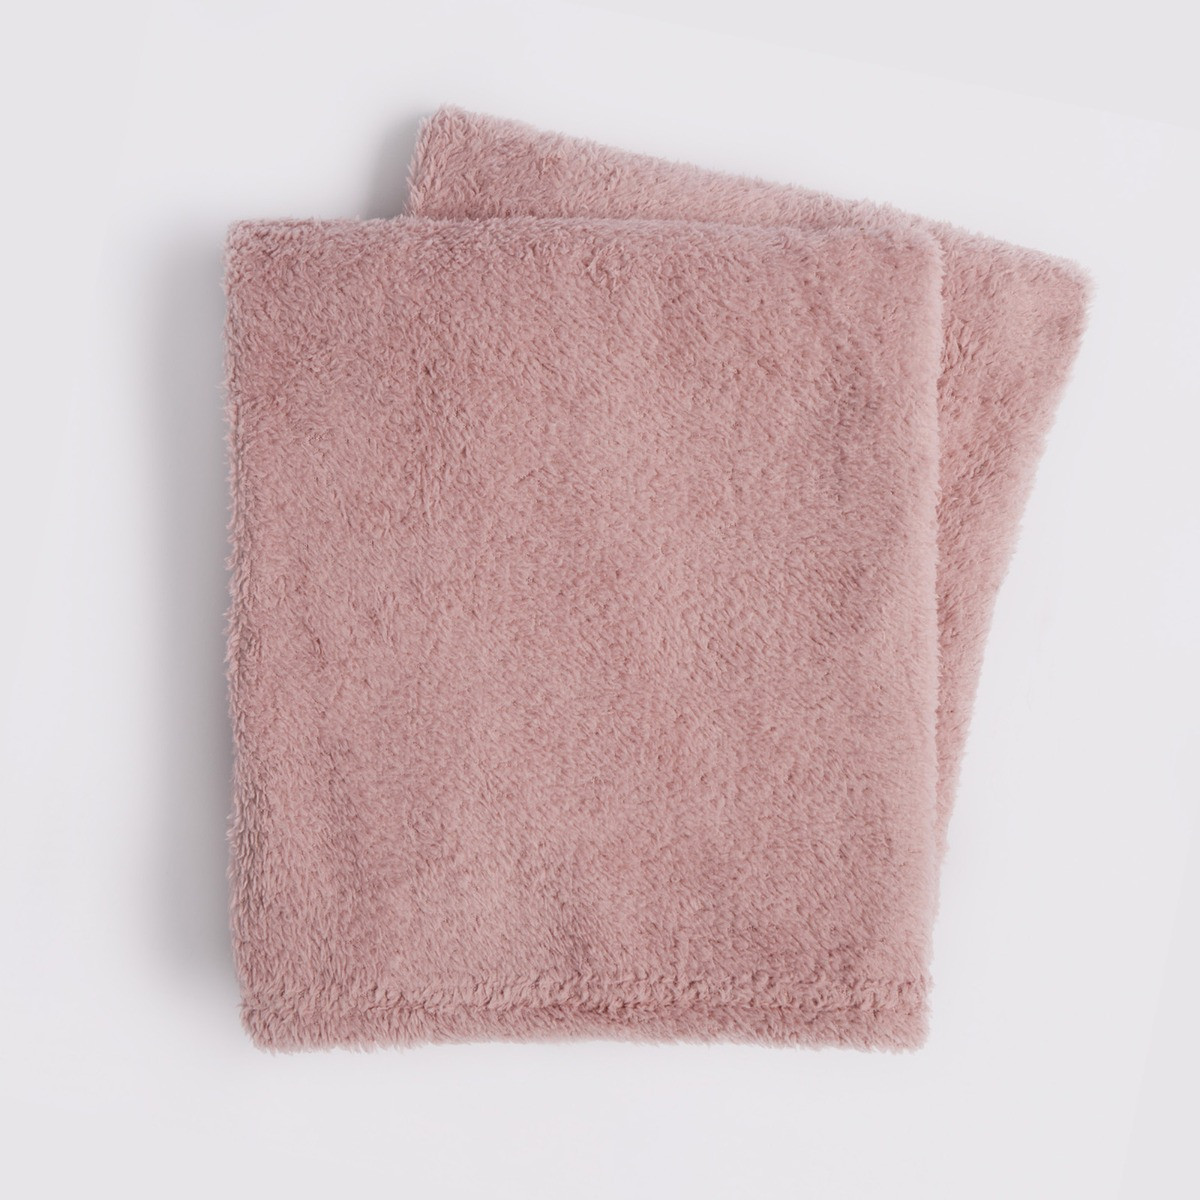 Brentfords Teddy Fleece Blanket Throw, Blush Pink - 200 x 240cm>